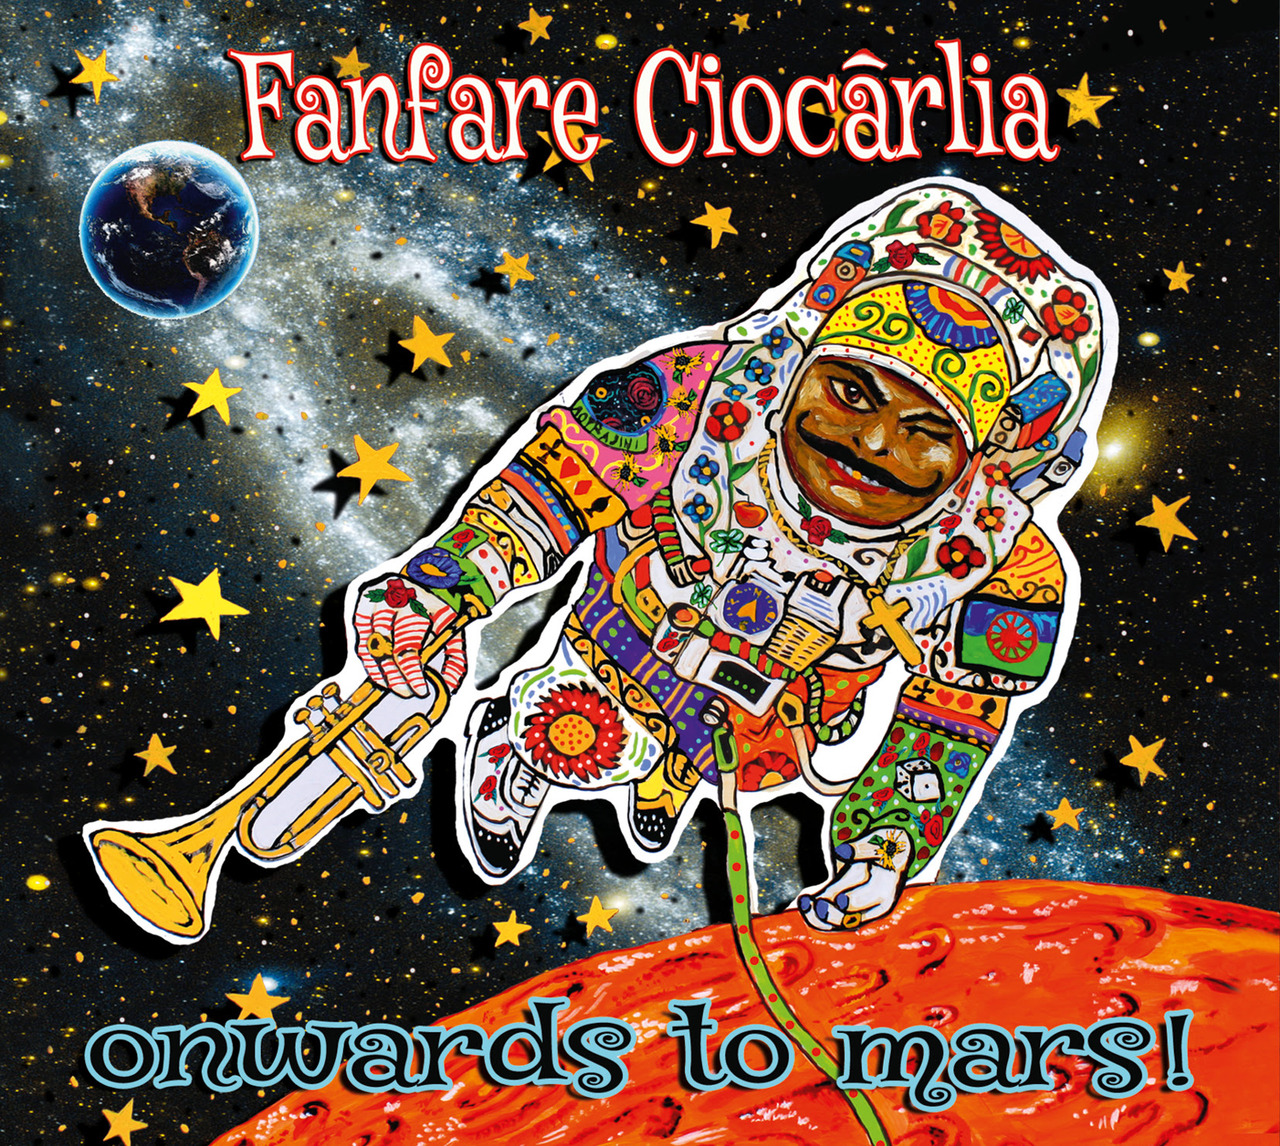 Fanfare Ciocarlia - first album in 3 years